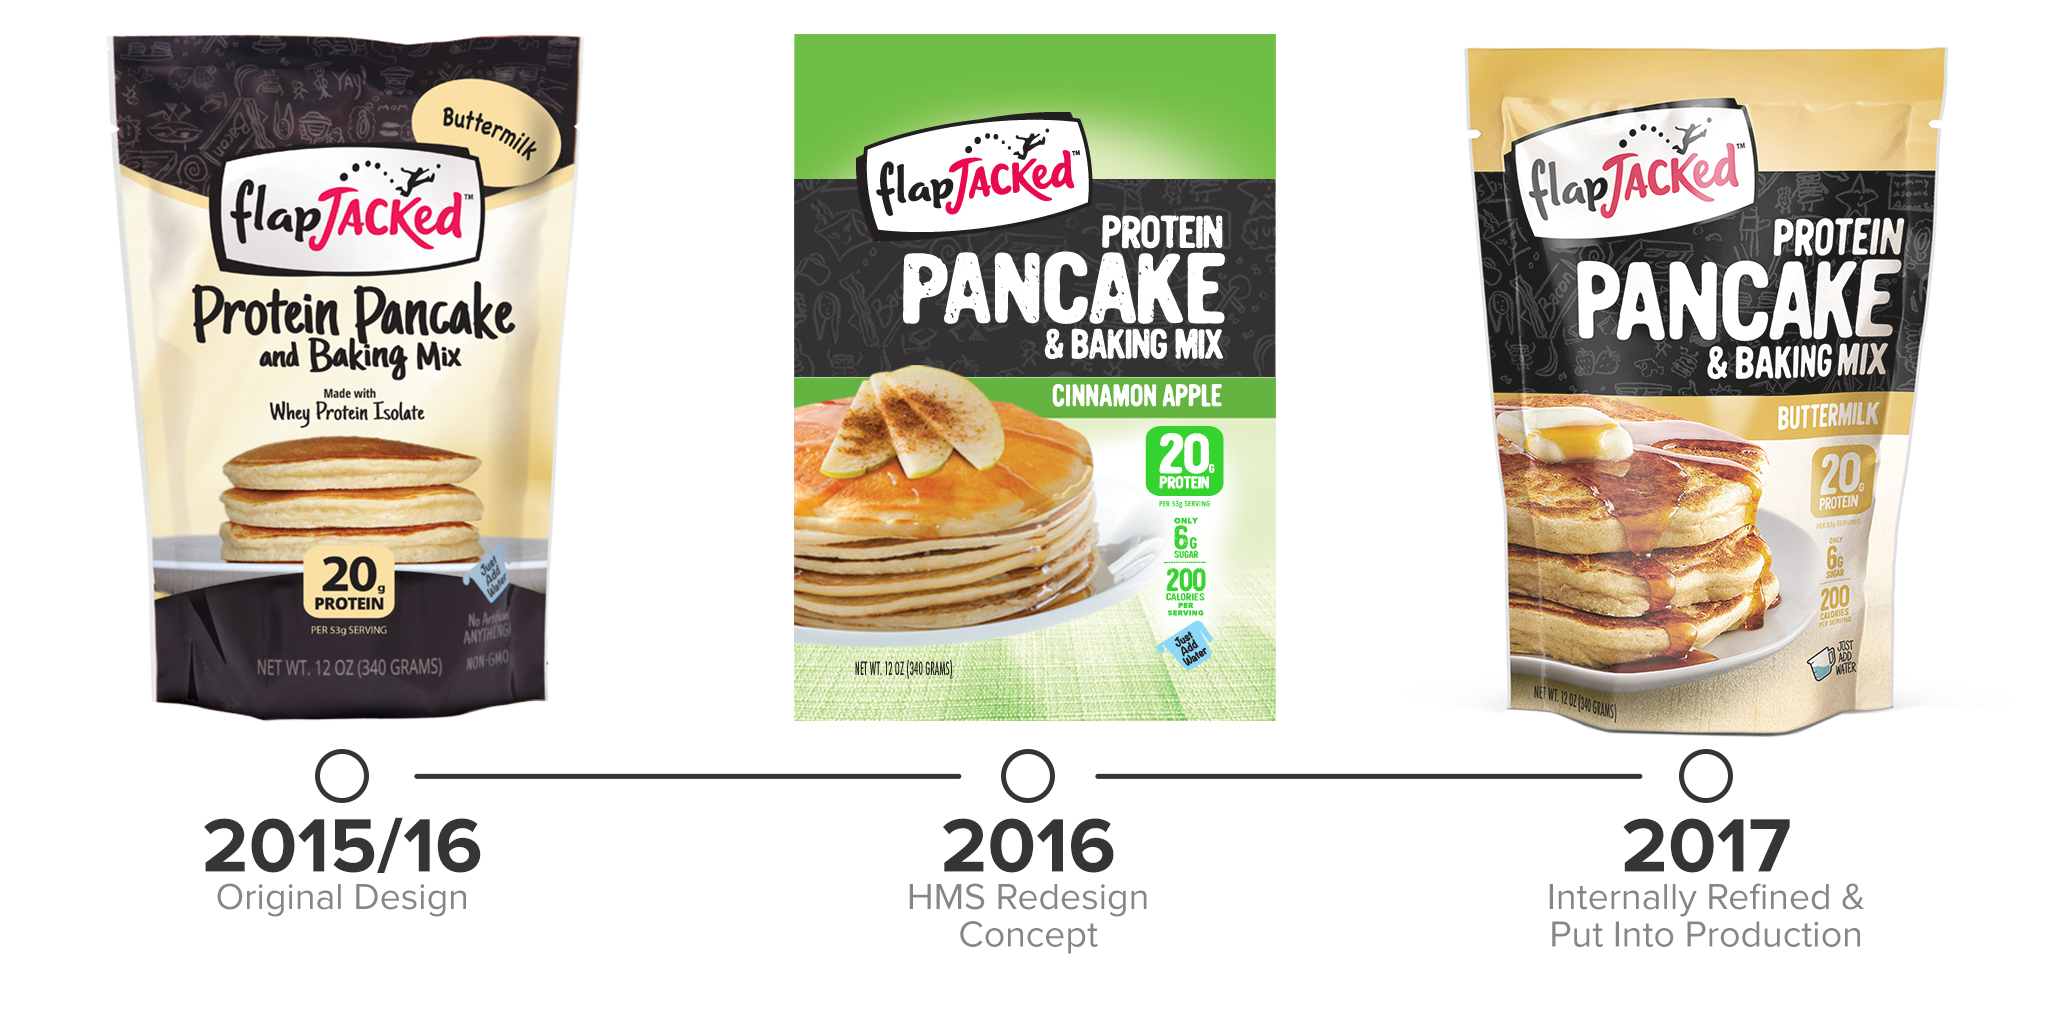 Protein Pancake Packaging Evolution 2015/2017